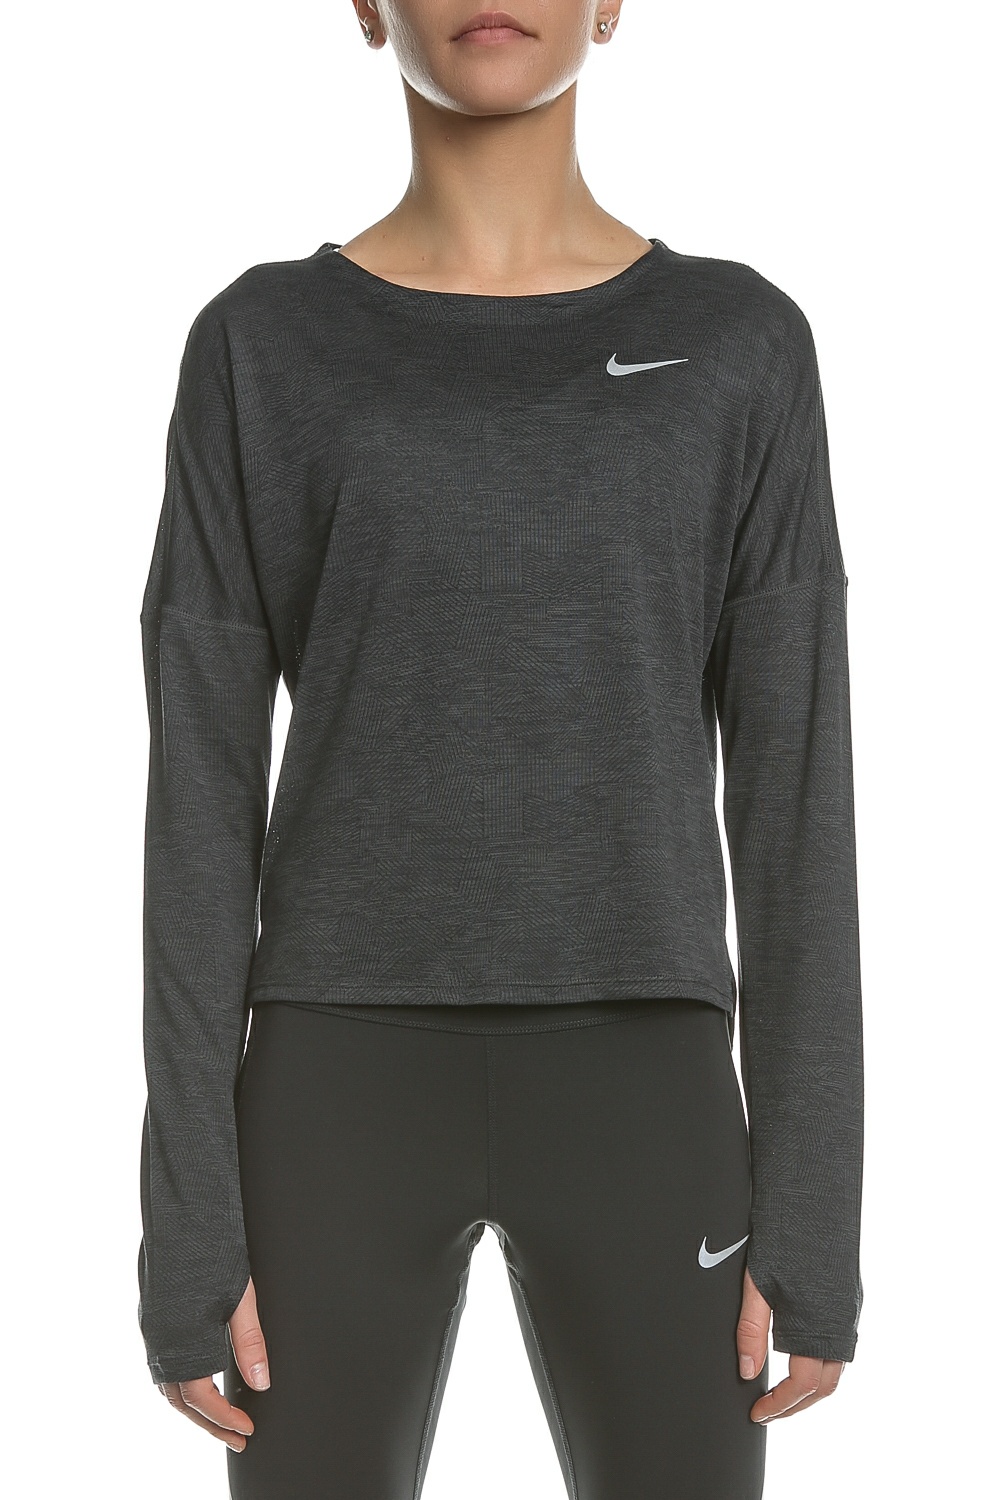 NIKE - Γυναικεία μακρυμάνικη μπλούζα Nike DRY MEDALIST γκρι Γυναικεία/Ρούχα/Αθλητικά/Φούτερ-Μακρυμάνικα